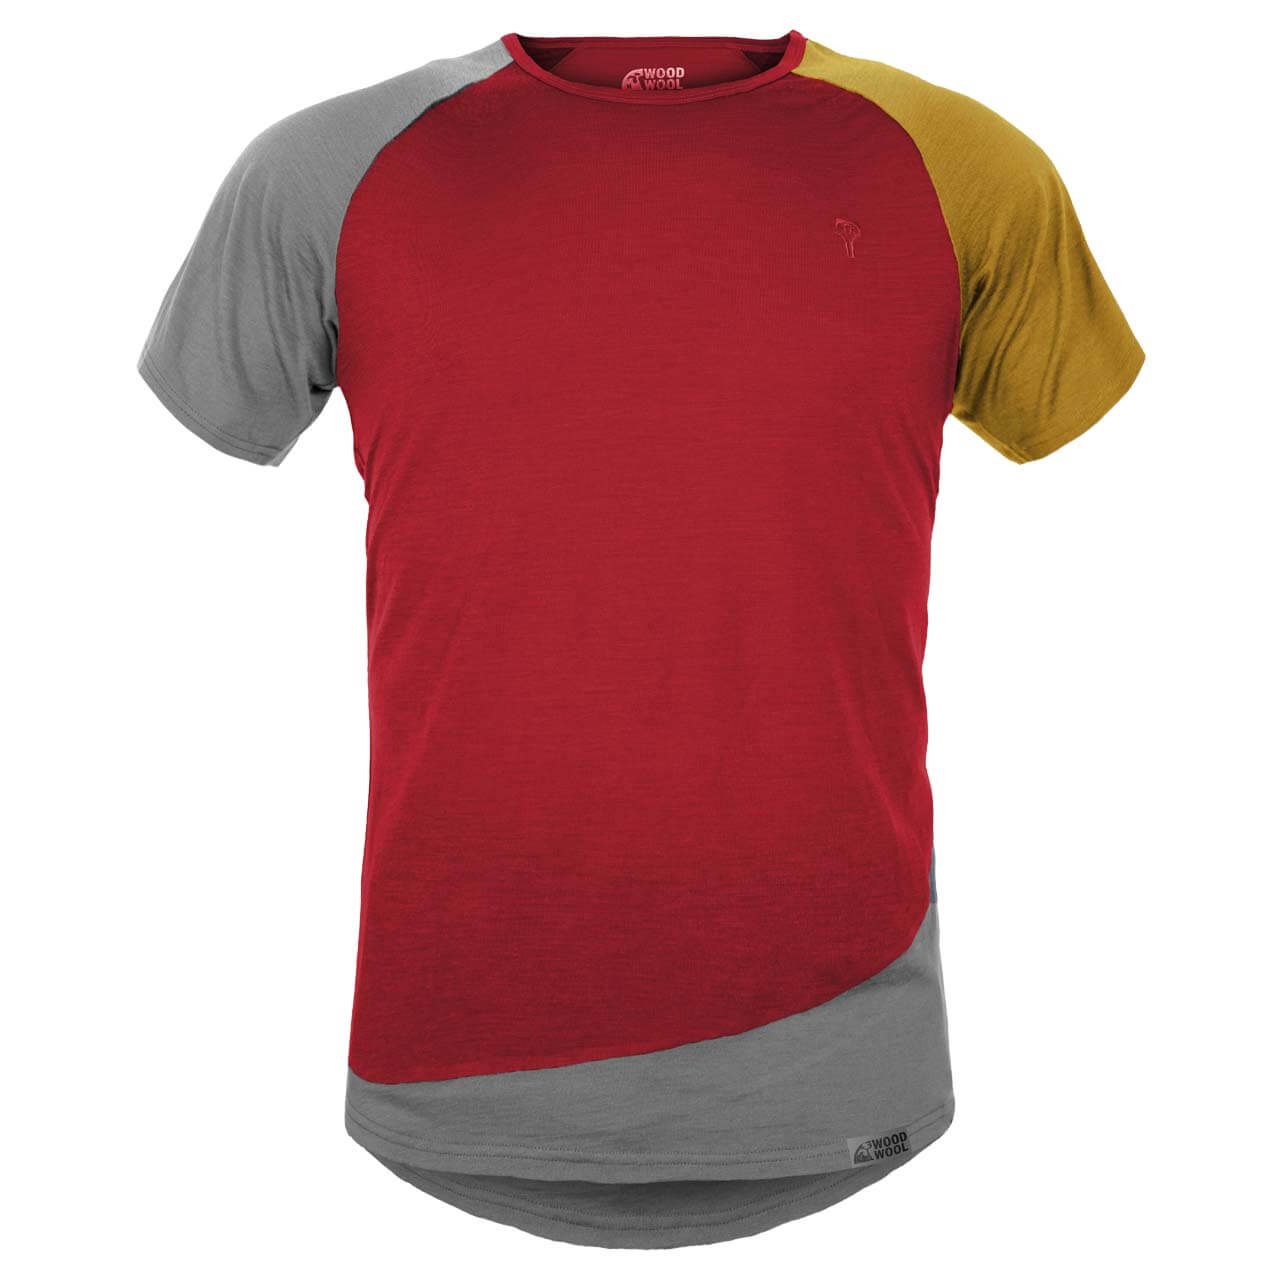 Grüezi Bag WoodWool T-Shirt Mr. Kirk - Fired Red Brick, M von Grüezi Bag}